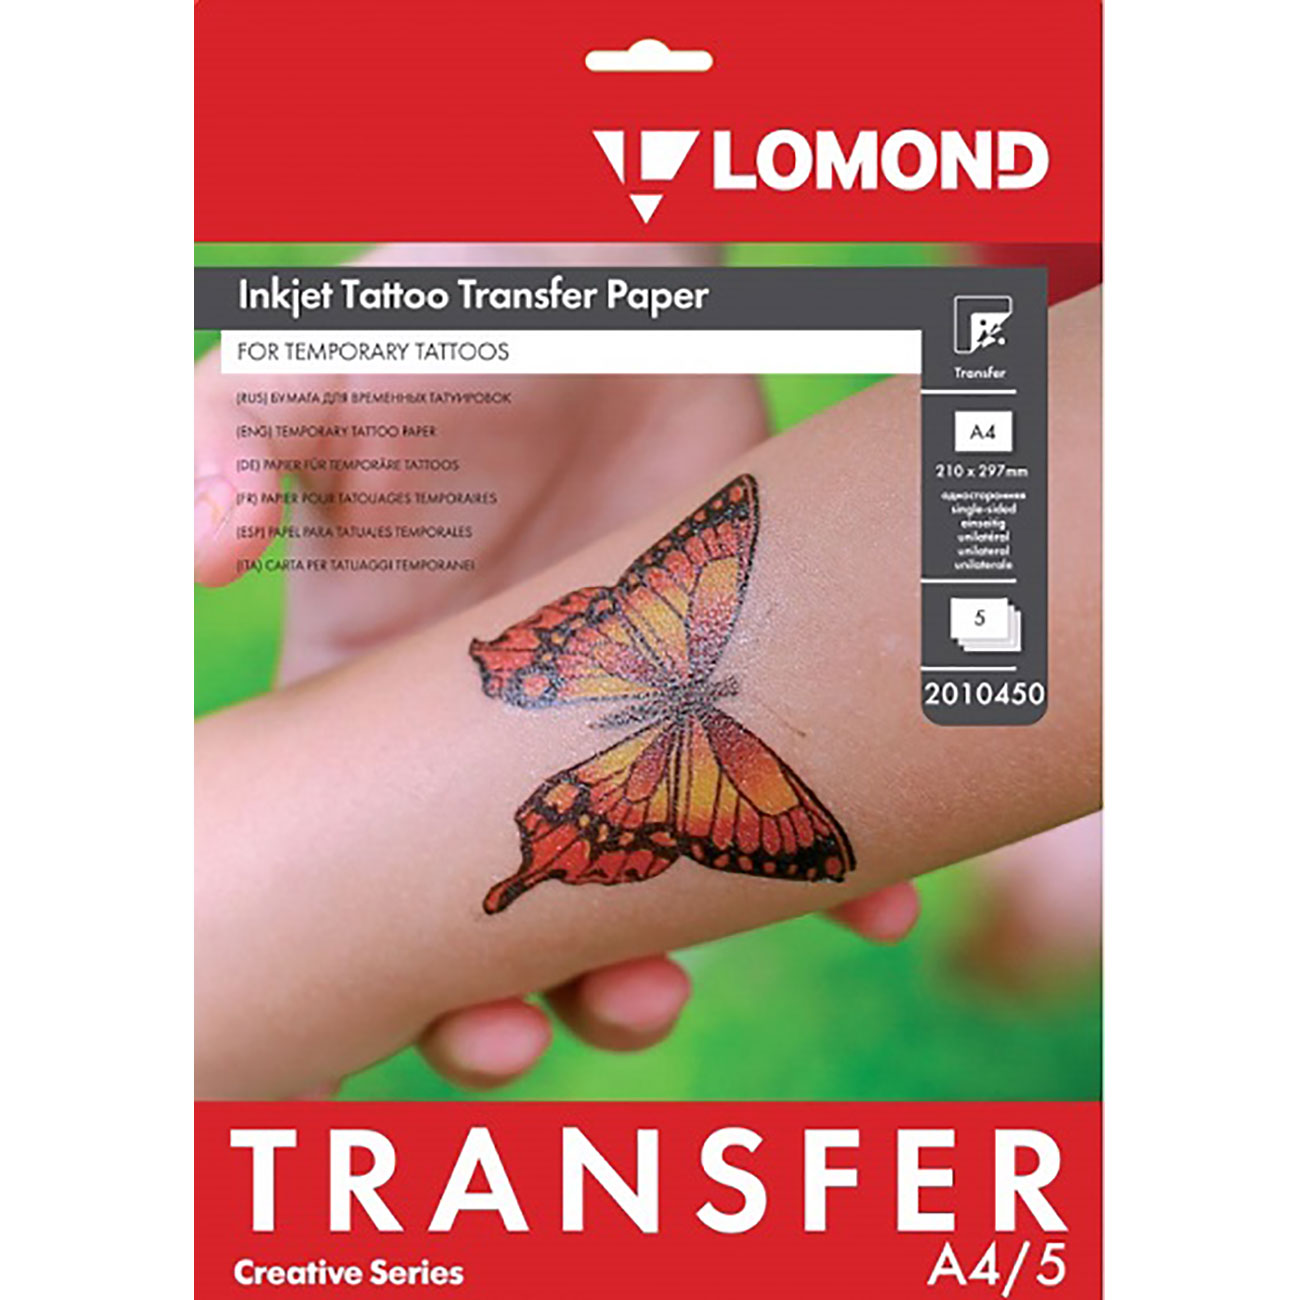 Lomond Inkjet Tattoo transfer paper